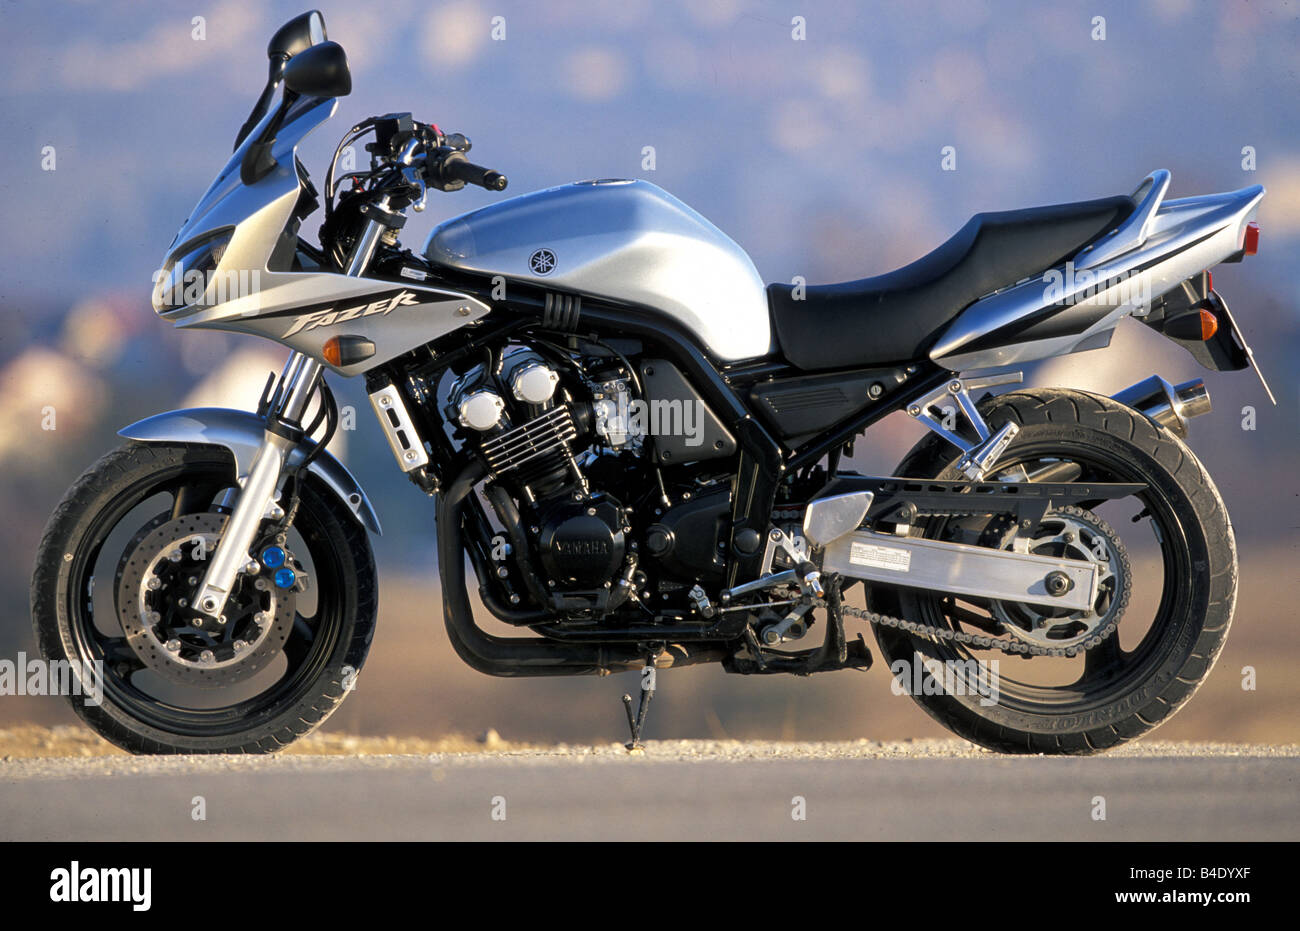 Yamaha fazer 600 -Fotos und -Bildmaterial in hoher Auflösung – Alamy